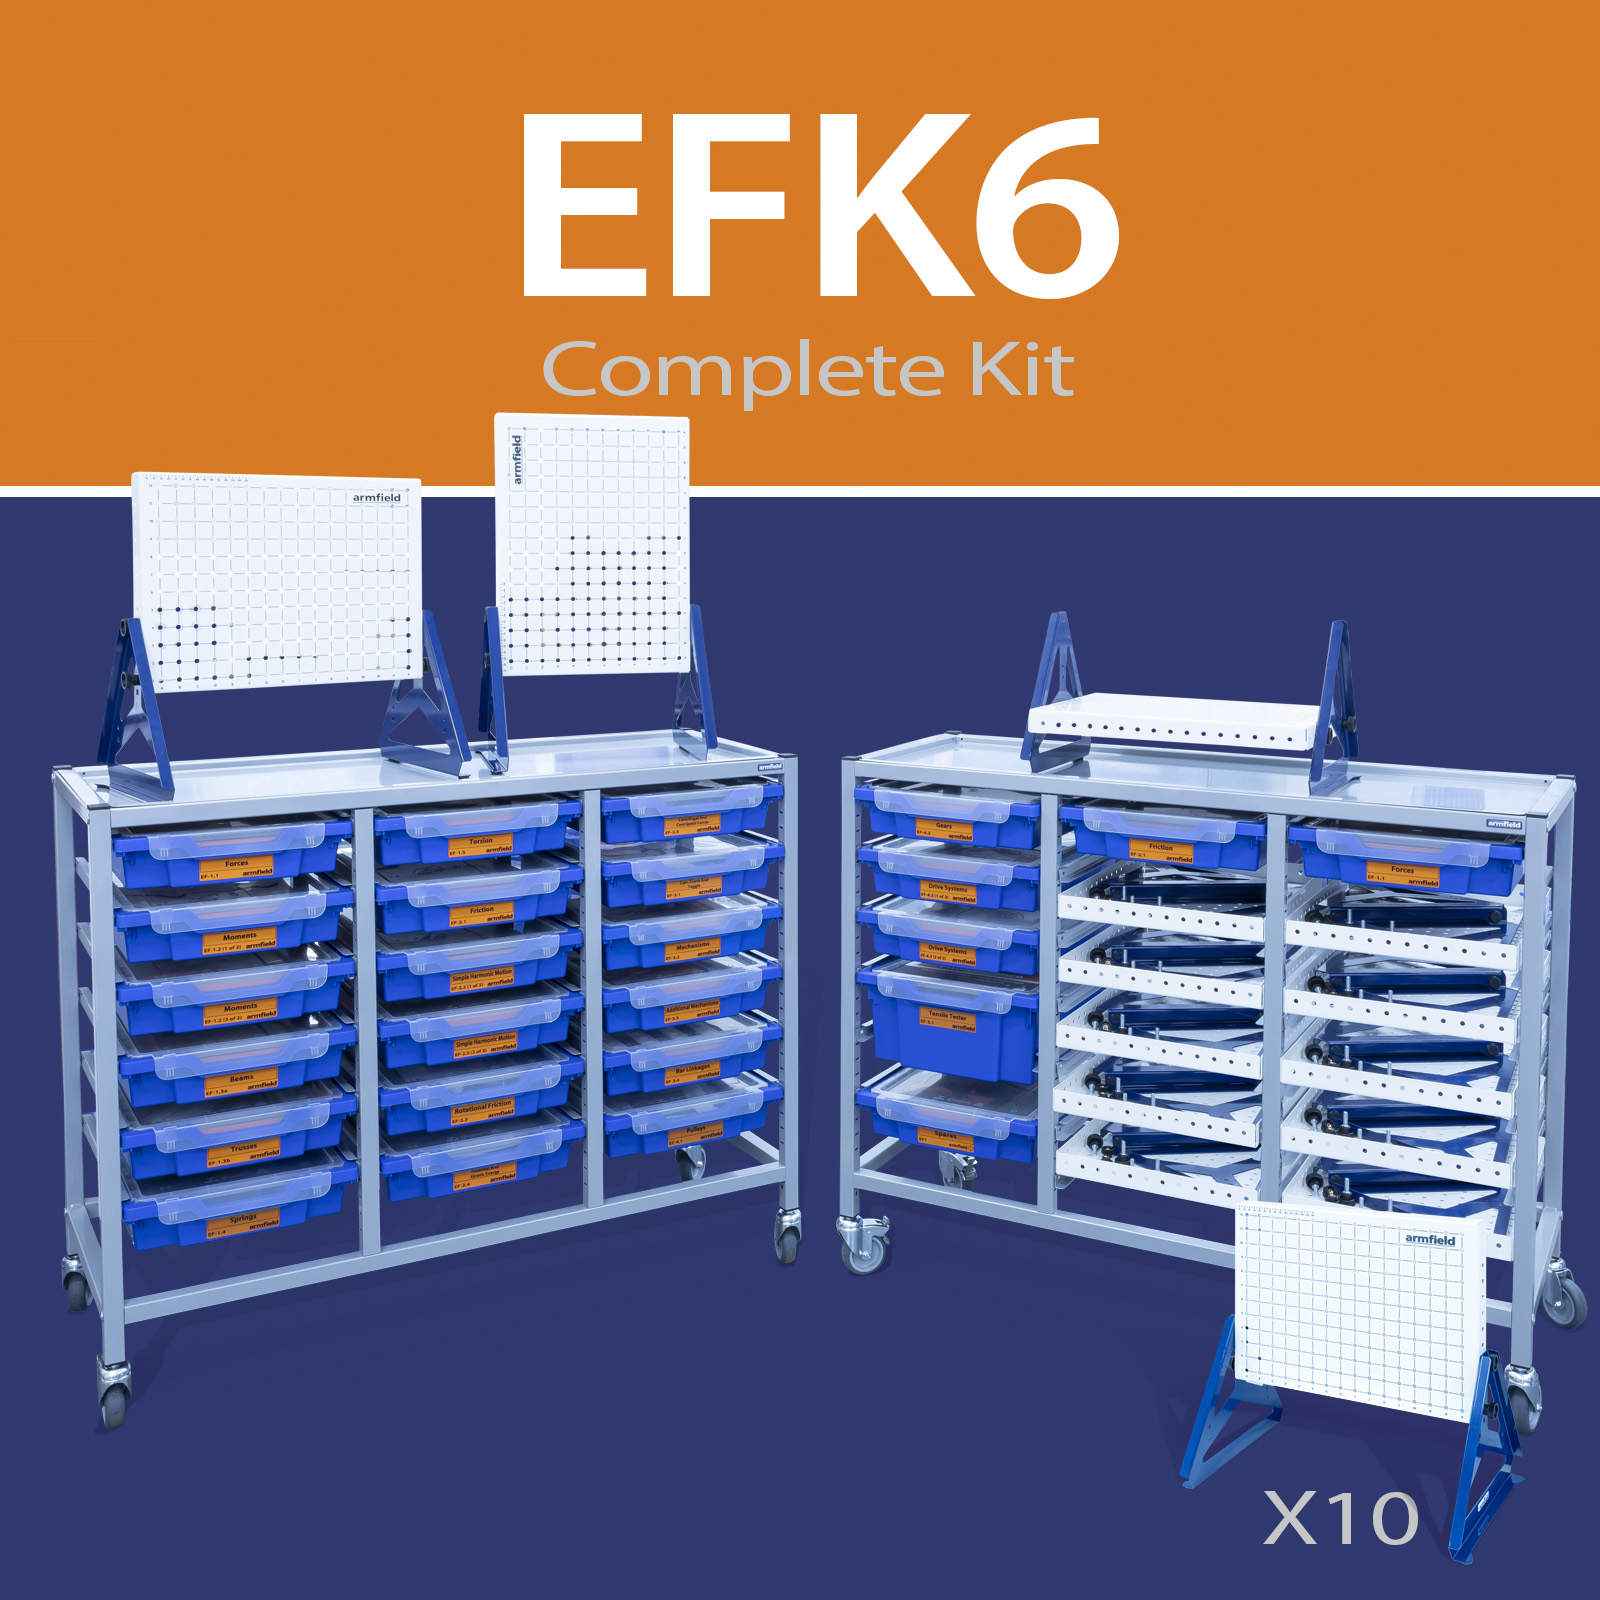 EFK6 Engineering Fundamentals Complete Kit